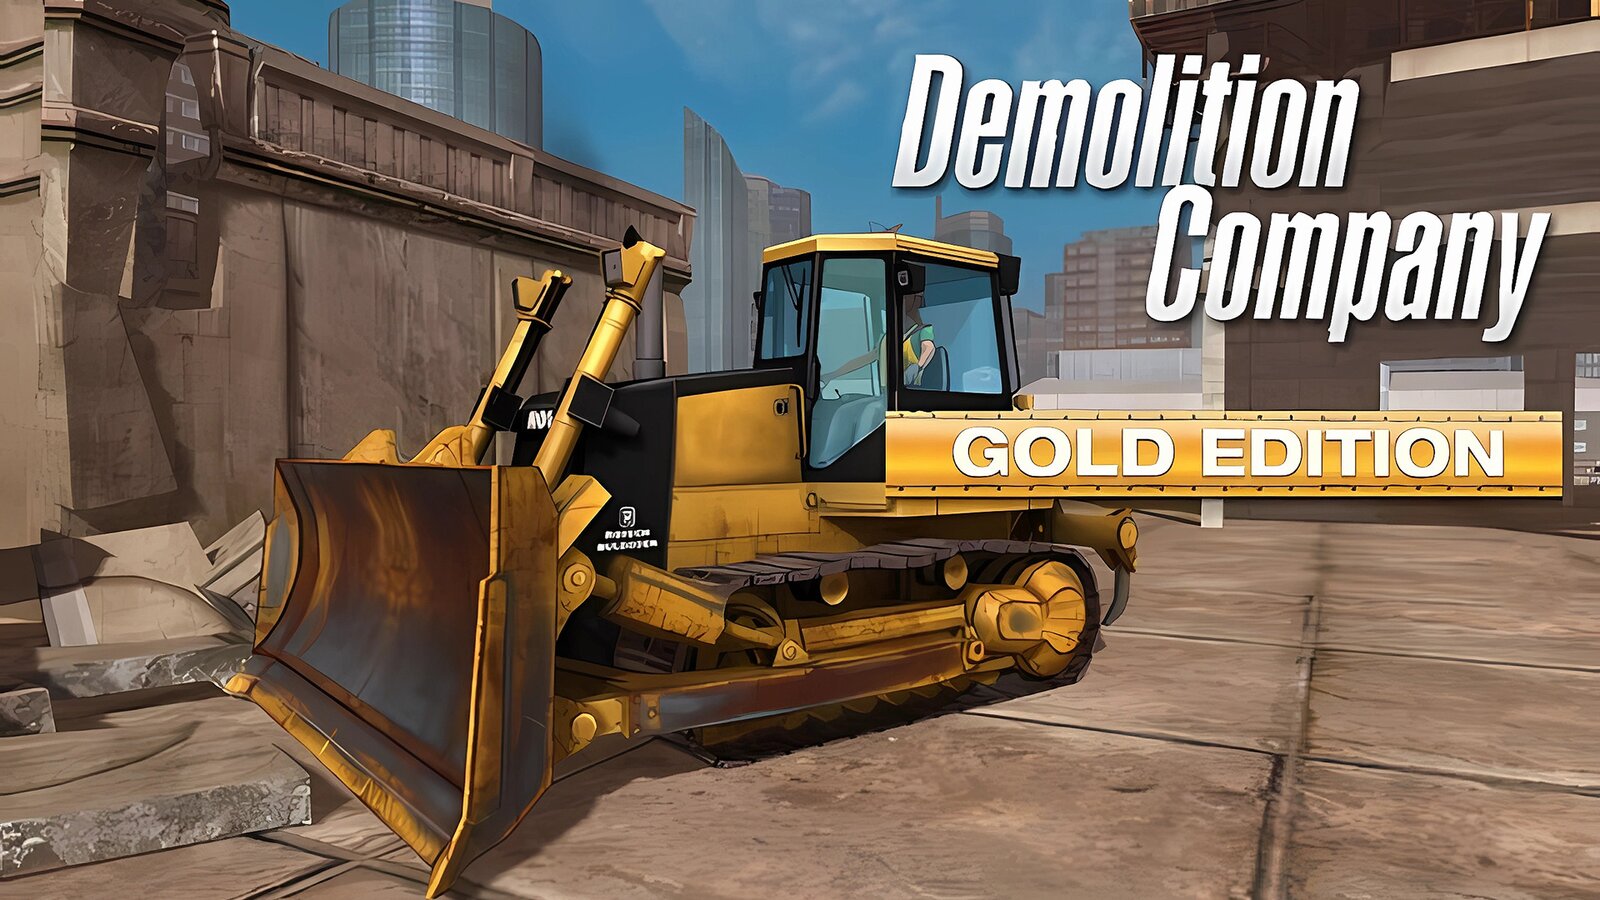 Demolition Company - Gold Edition